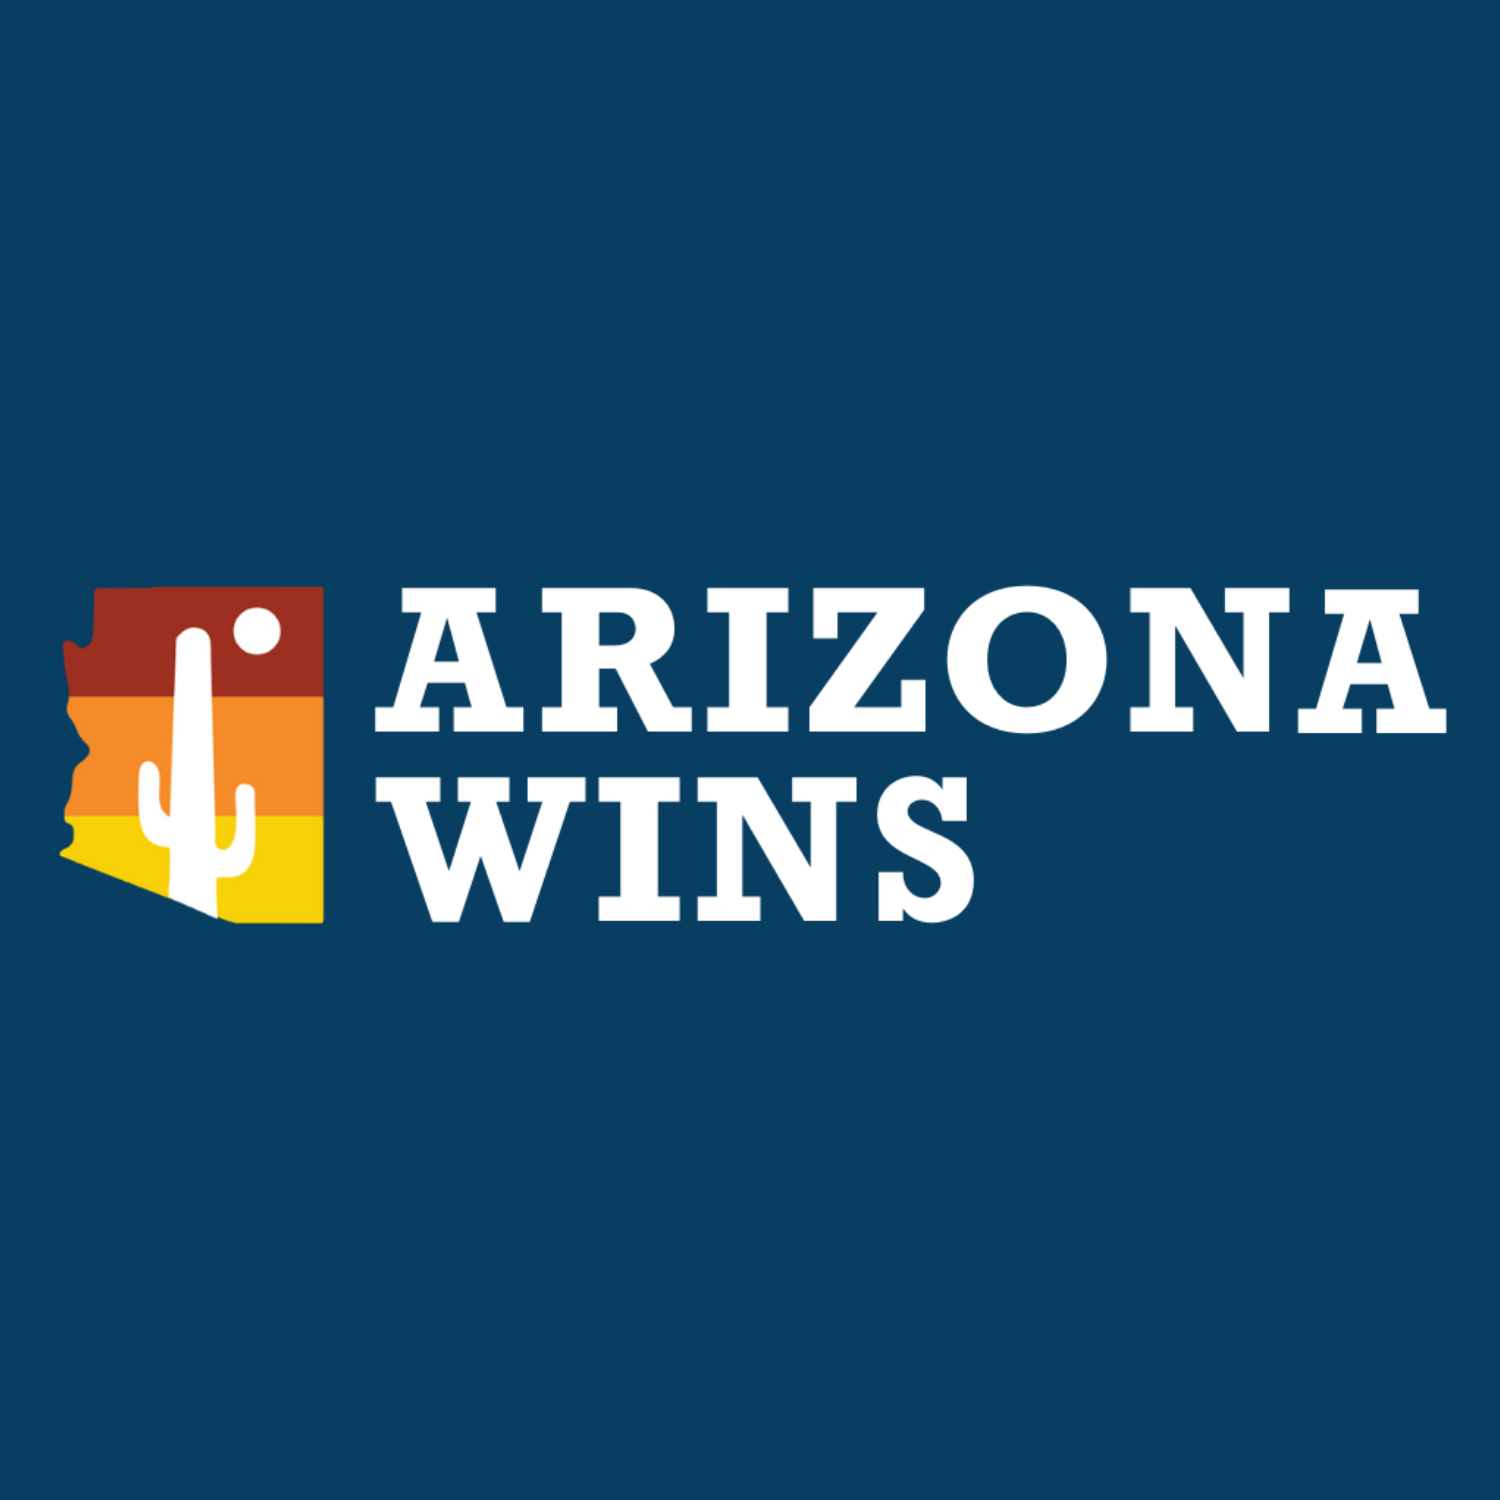 Arizona wins square.png